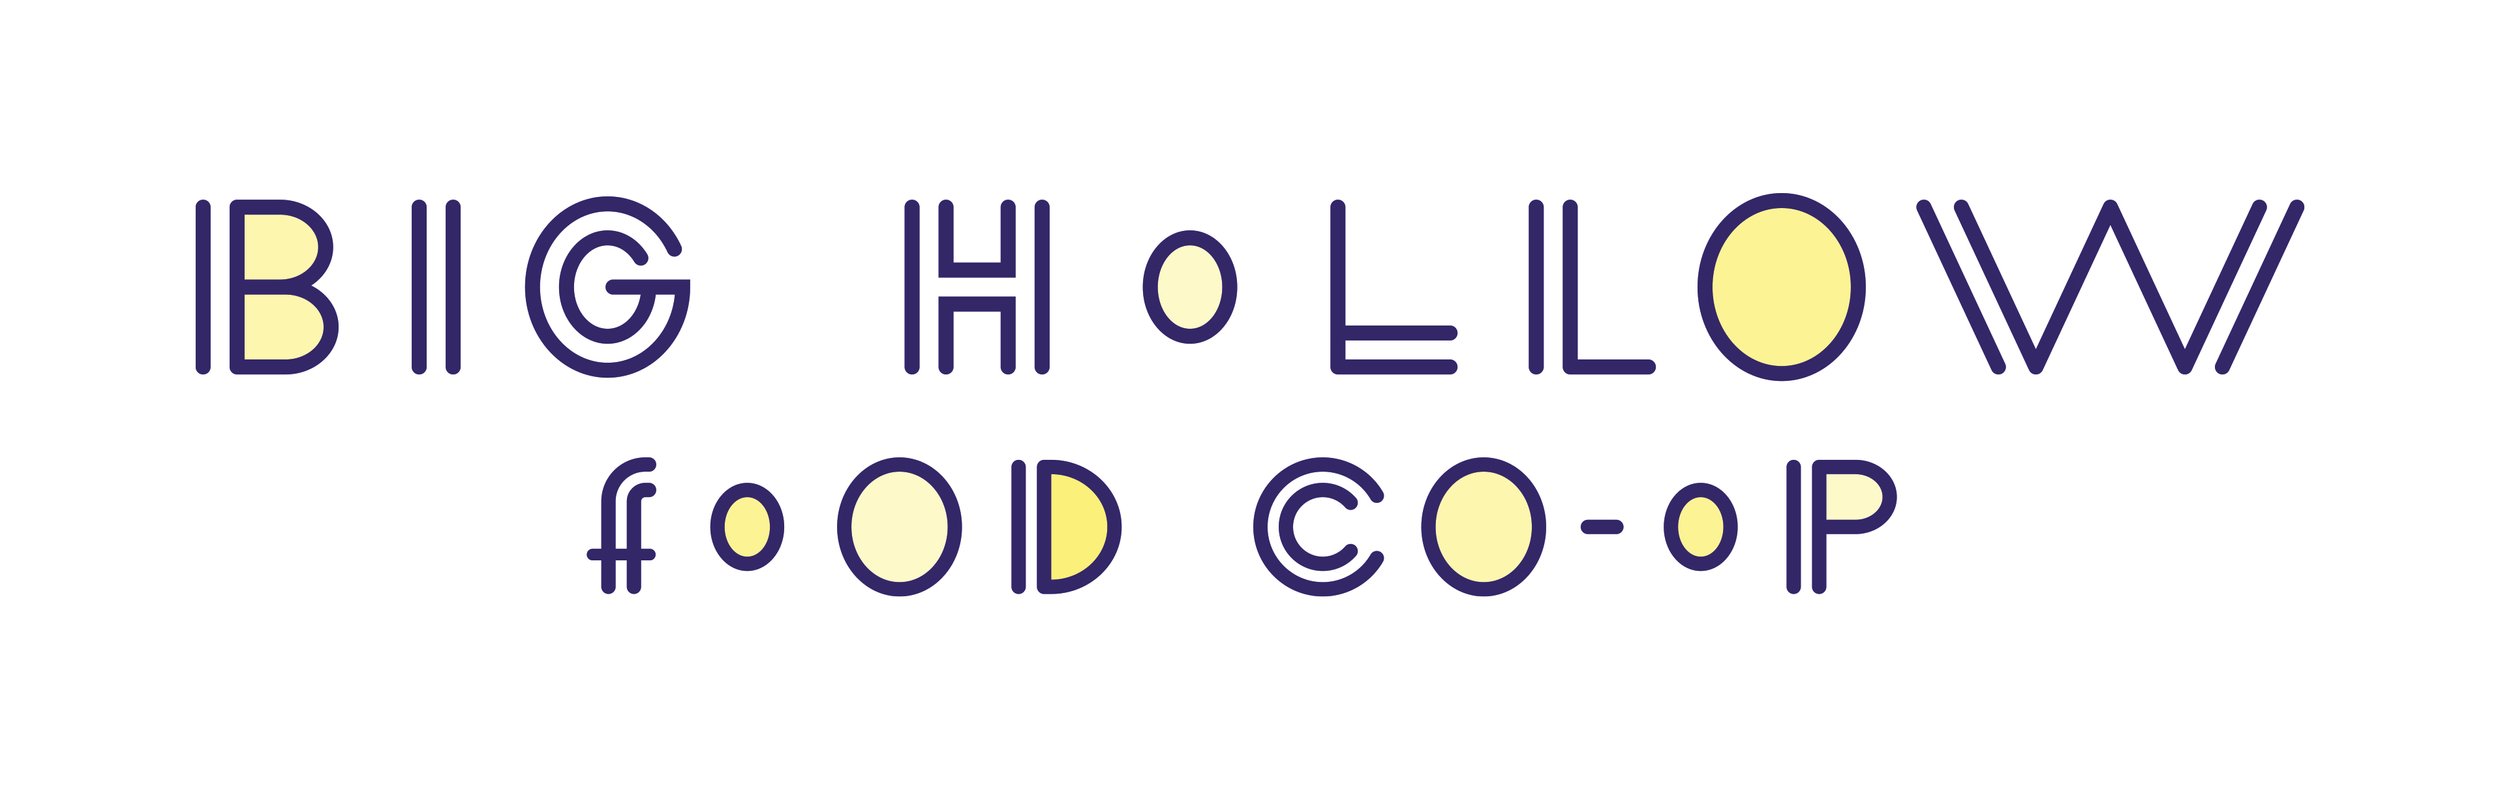 250 Big Hollow Food Coop Logo.jpg